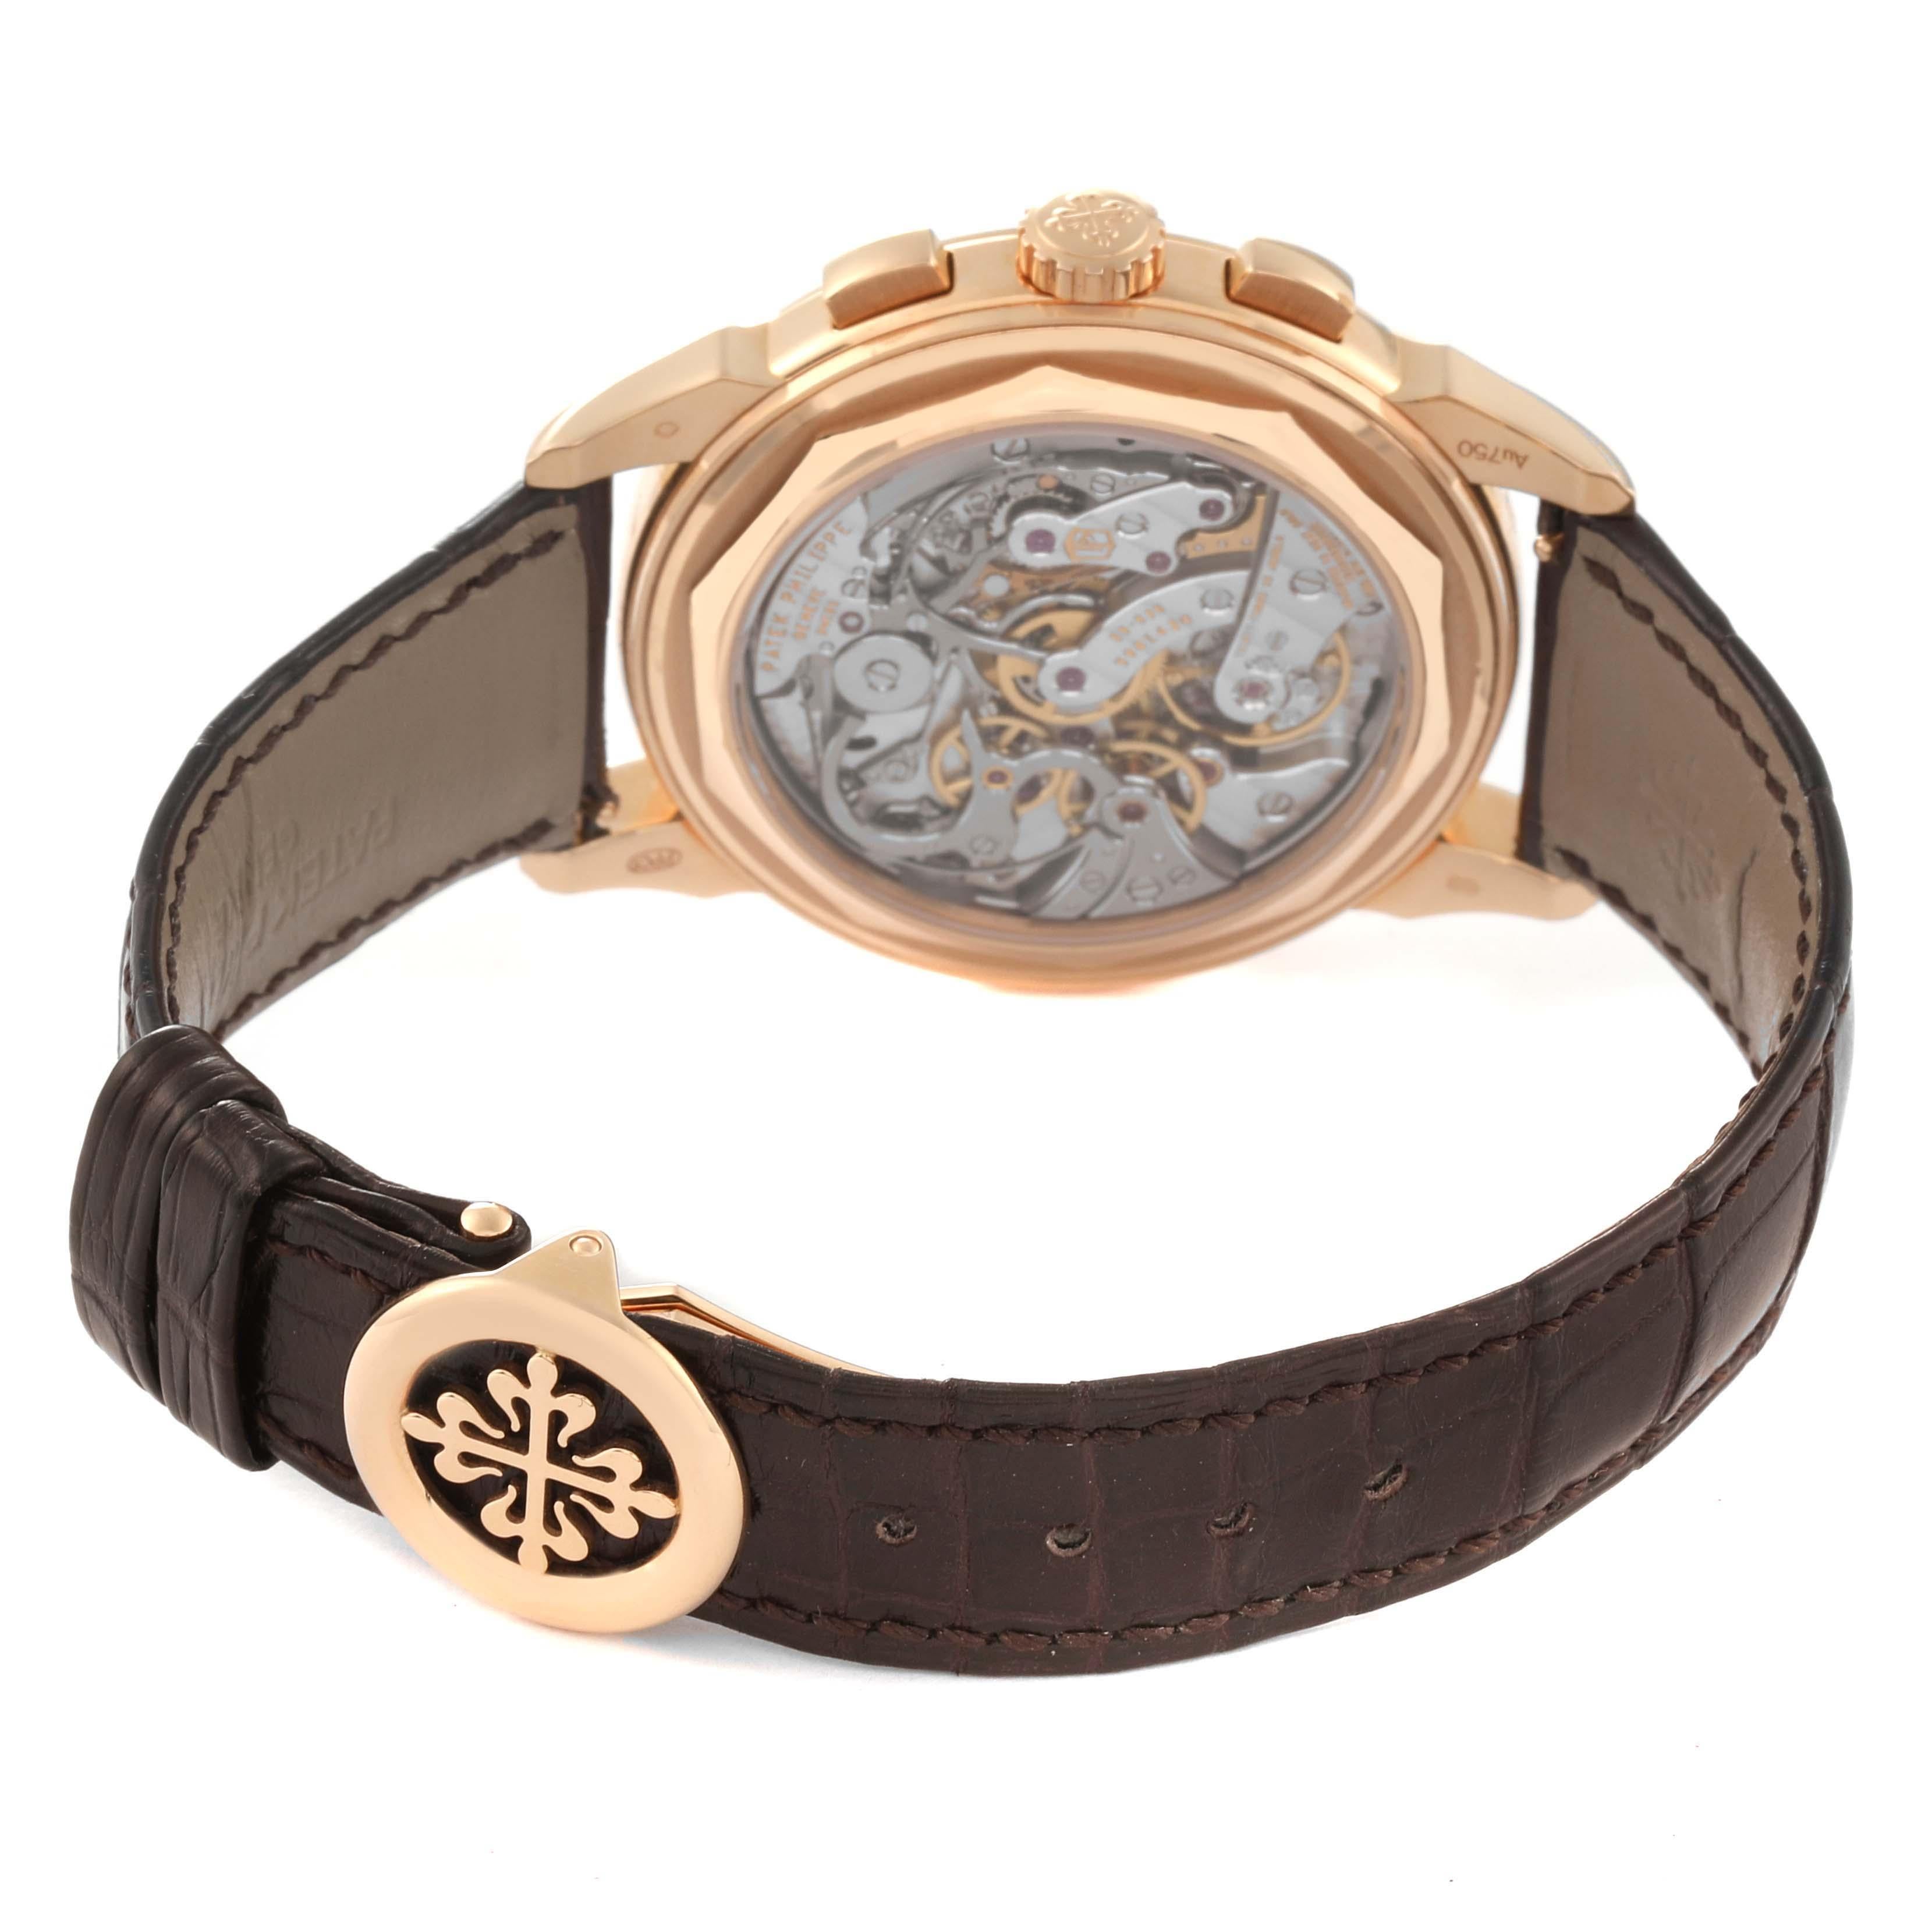 Patek Philippe Grand Complications Perpetual Calendar Rose Gold Watch 5270 For Sale 3